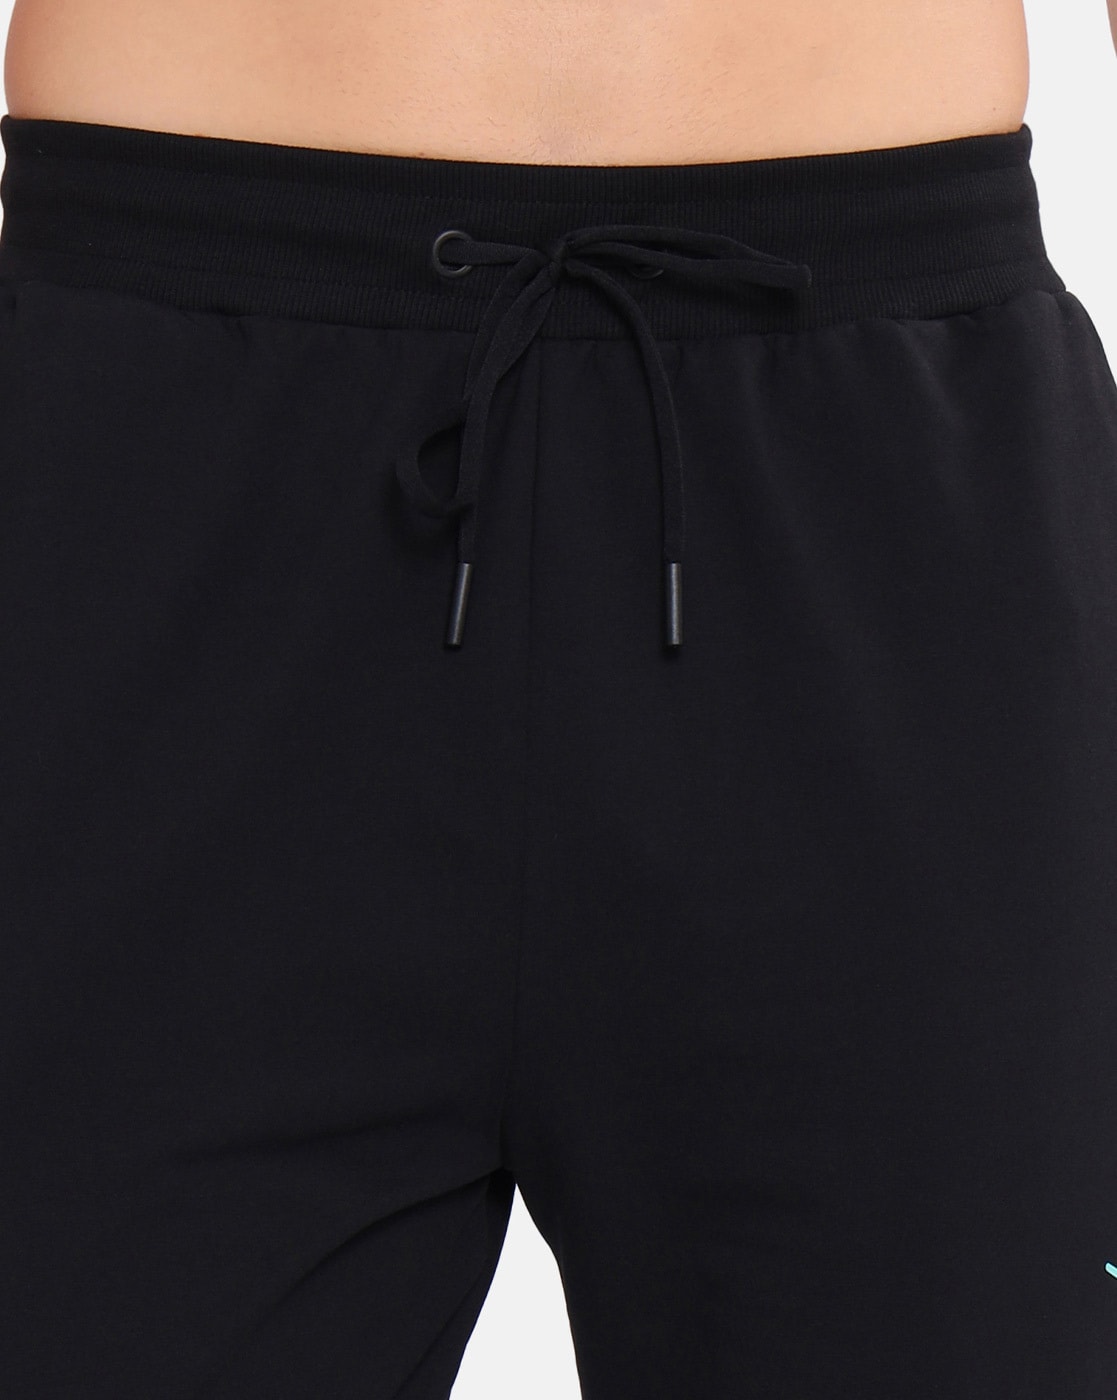 Buy Black Track Pants for Men by Cultsport Online